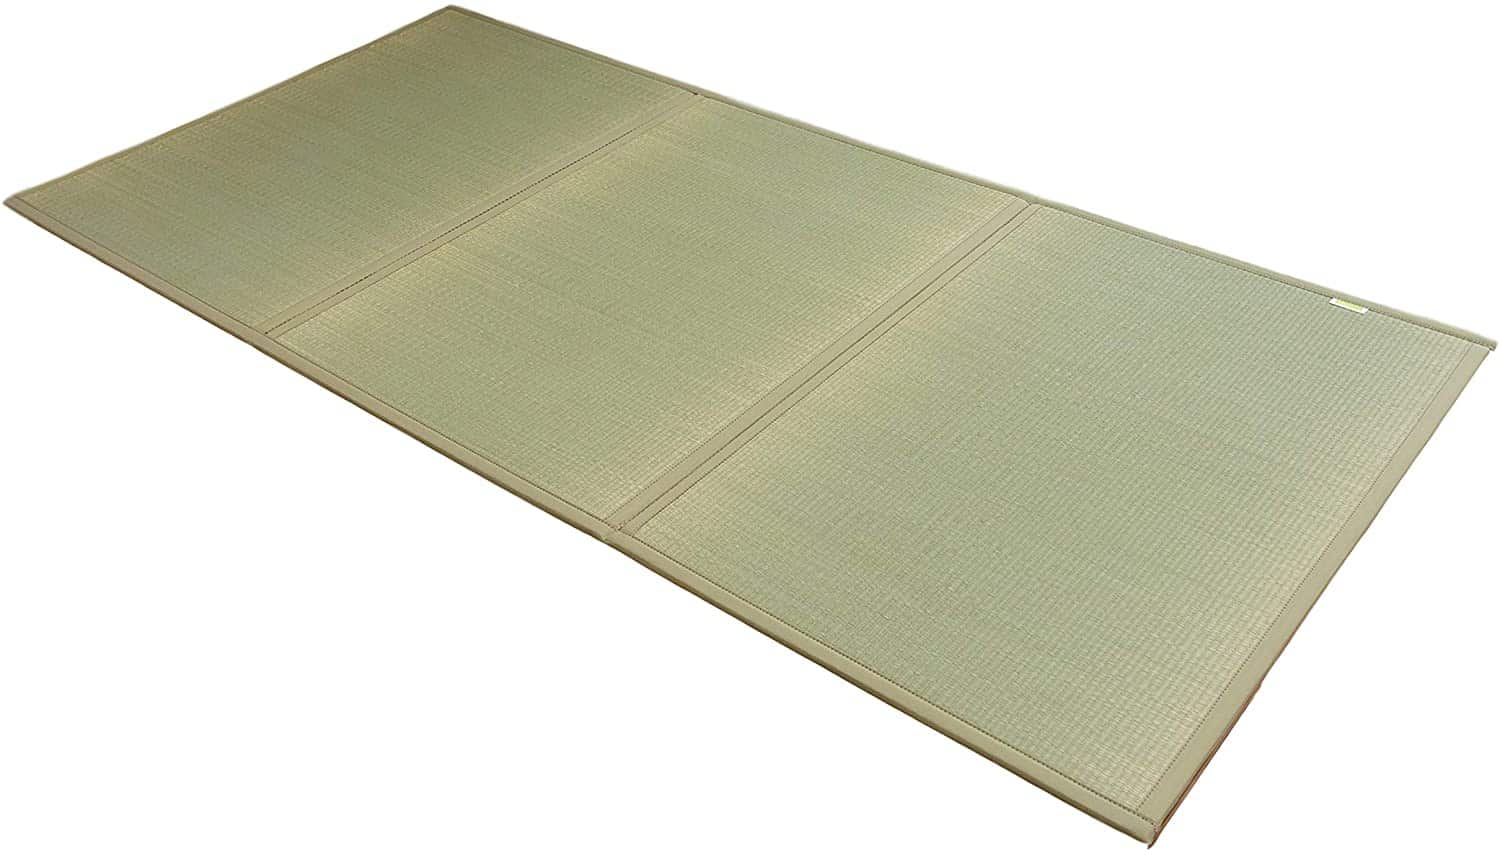 Best traditional & best for flooring tatami mat- FULI Japanese Traditional Igusa Mat